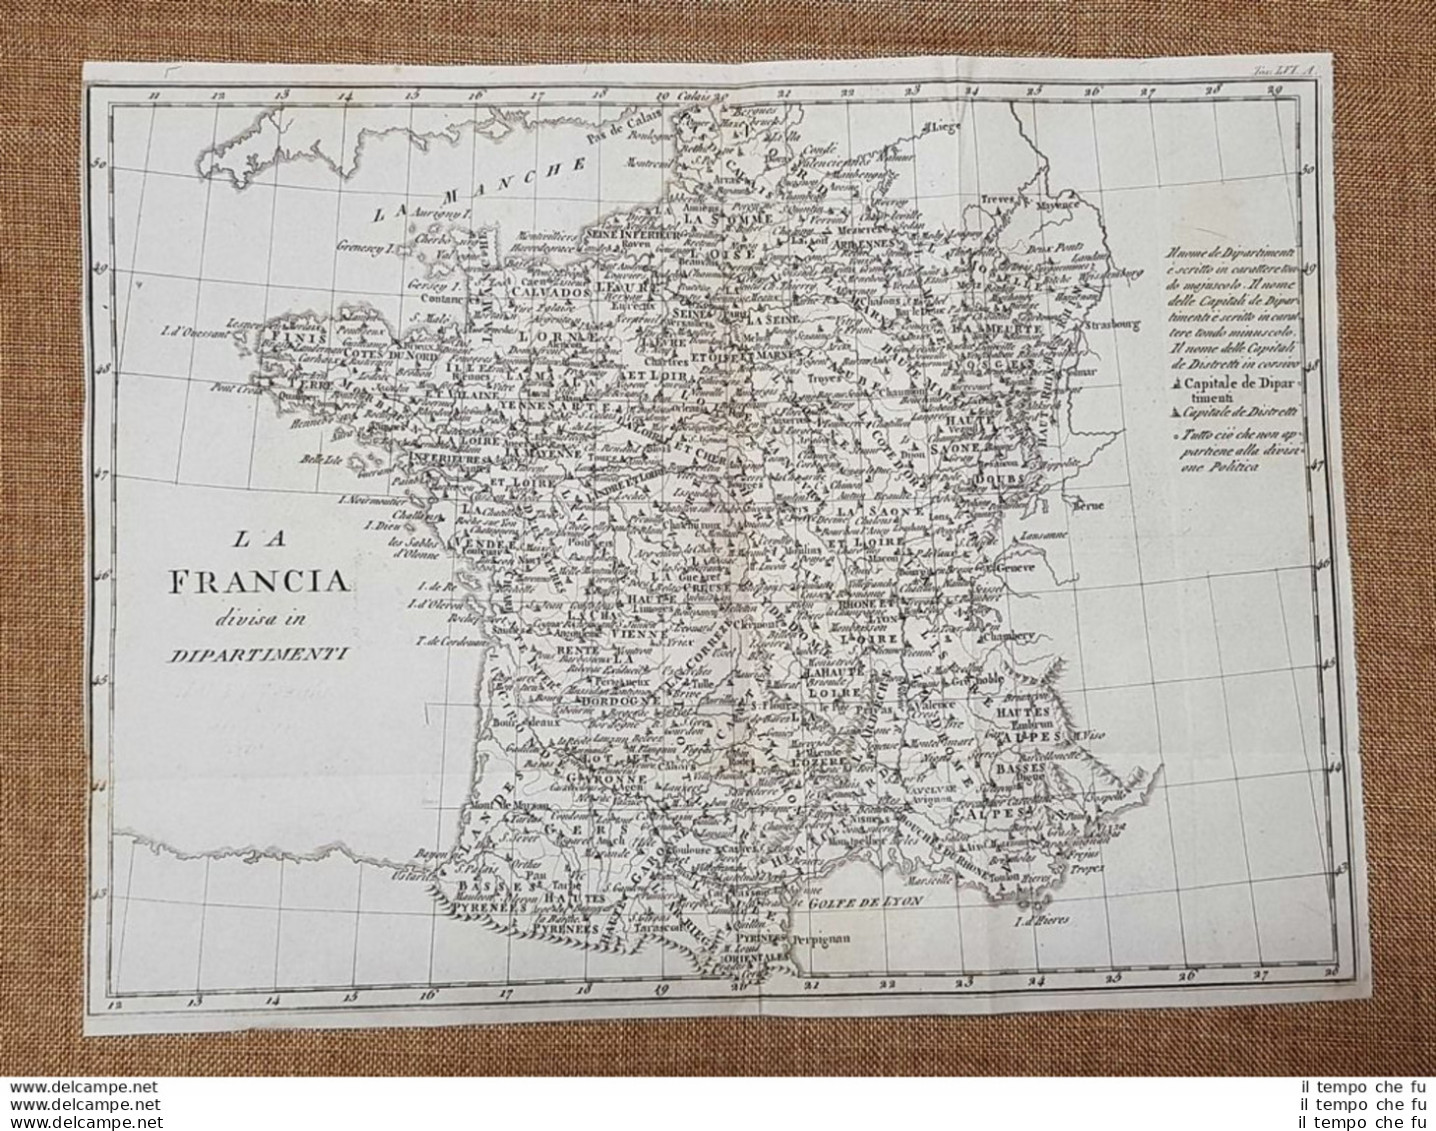 Carta Geografica O Mappa Francia Divisa In Dipartimenti Leonardo Cacciatore 1831 - Carte Geographique